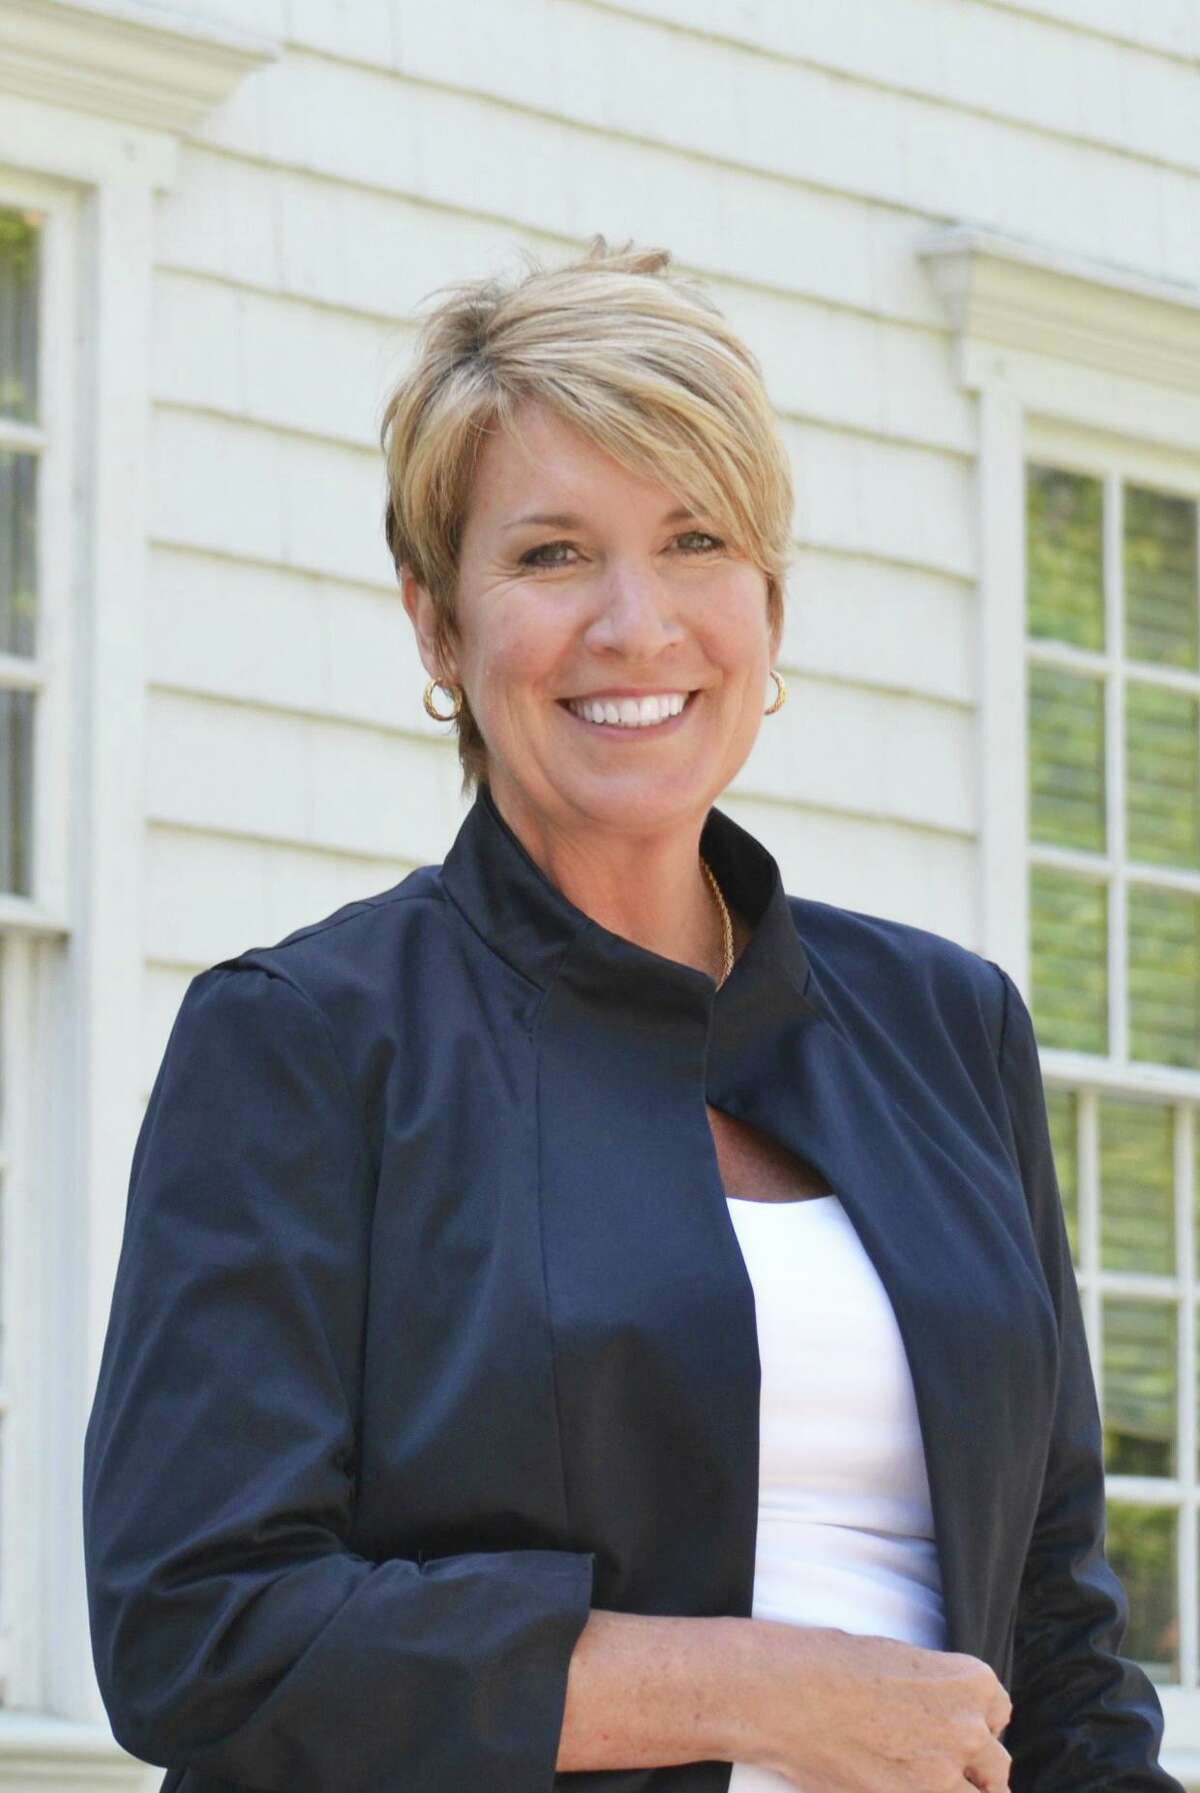 State Rep. Laura Devlin